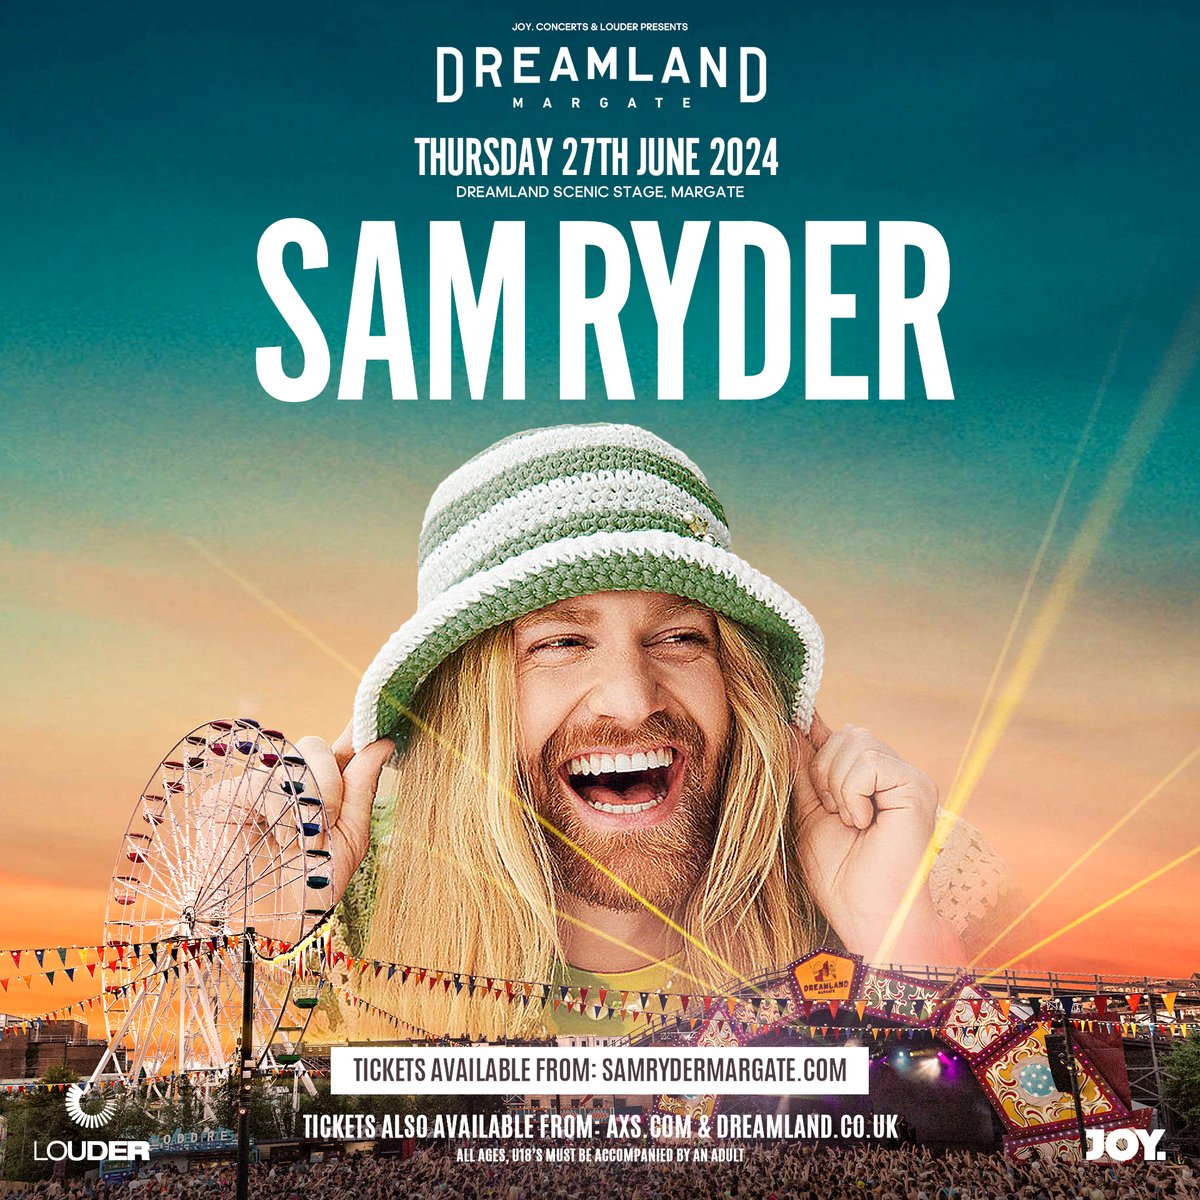 See ya at @DreamlandMarg this summer! ☀️ Grab tickets here 👉 samrydermargate.com